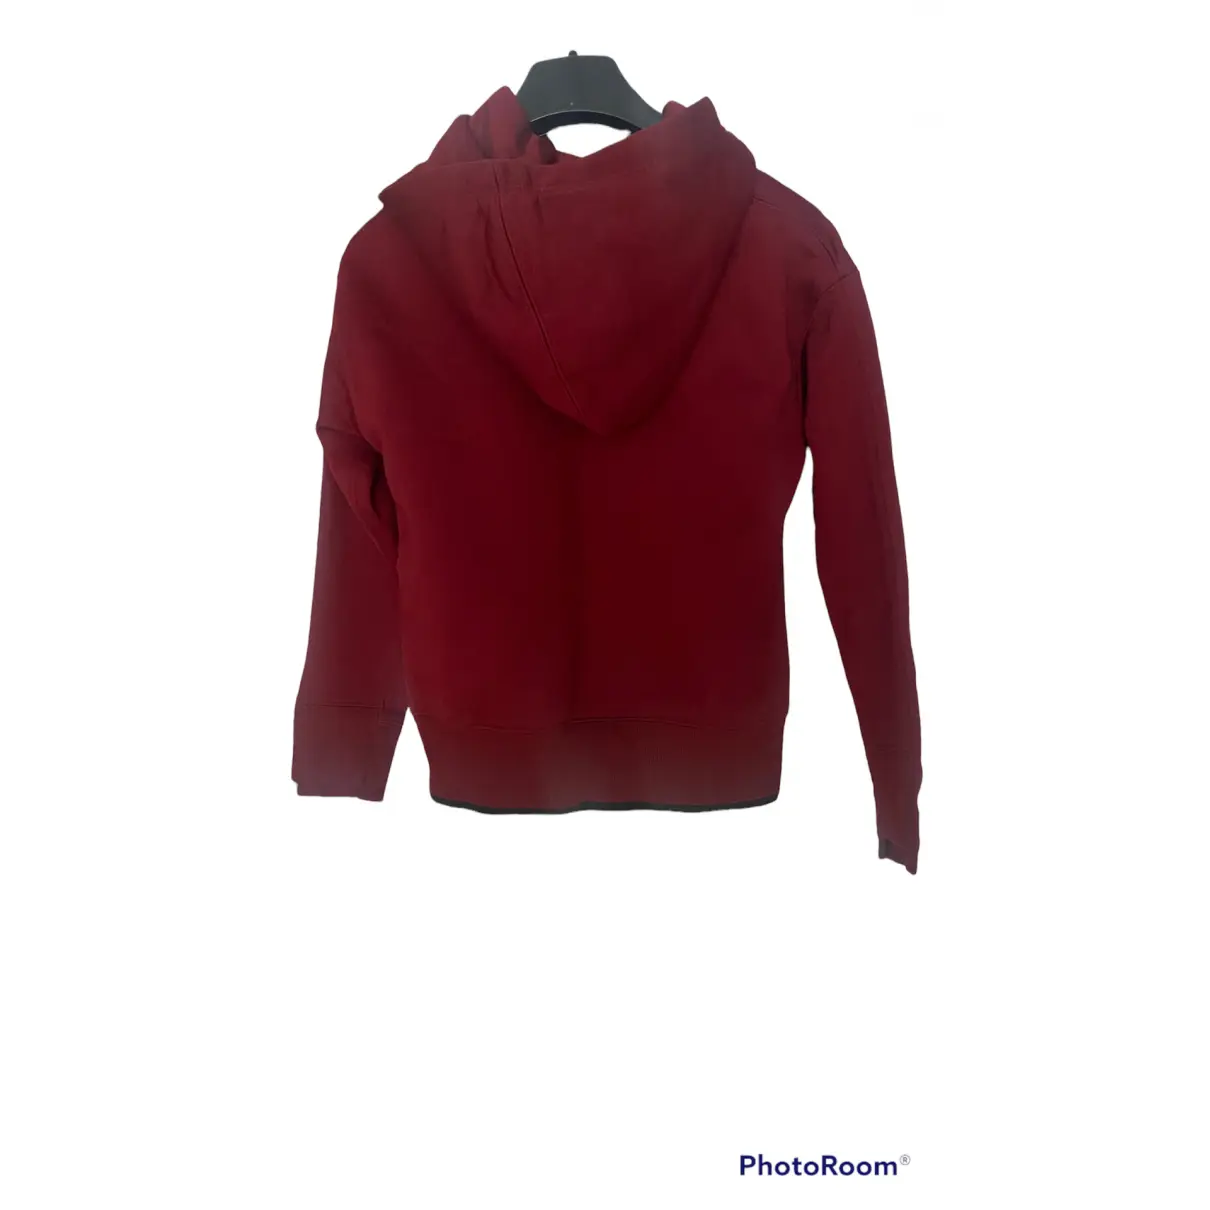 Buy Helmut Lang Sweatshirt online